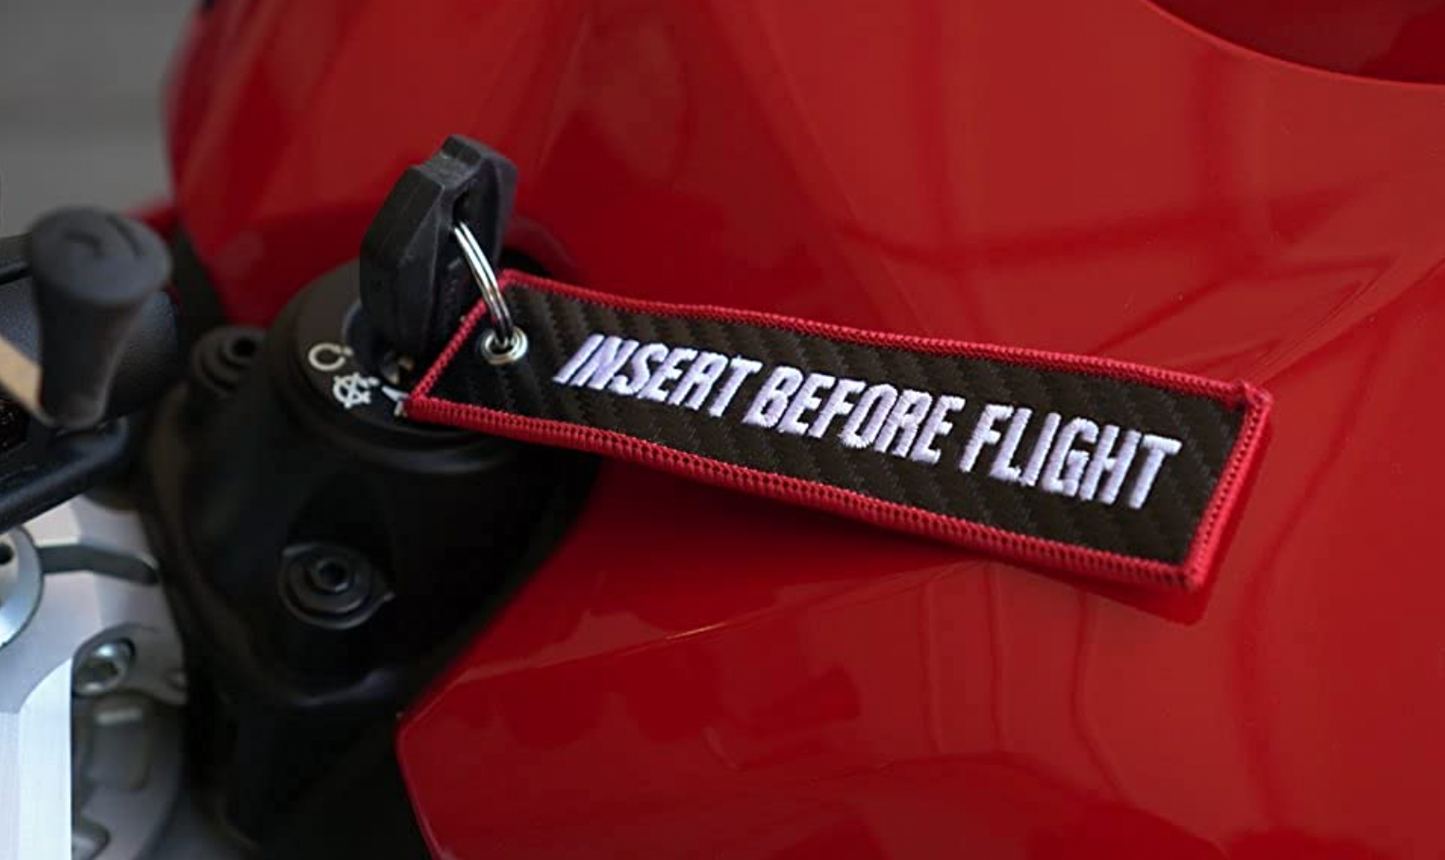 "Insert Before Flight" Carbon Fiber Keytag Motorcycle keychain